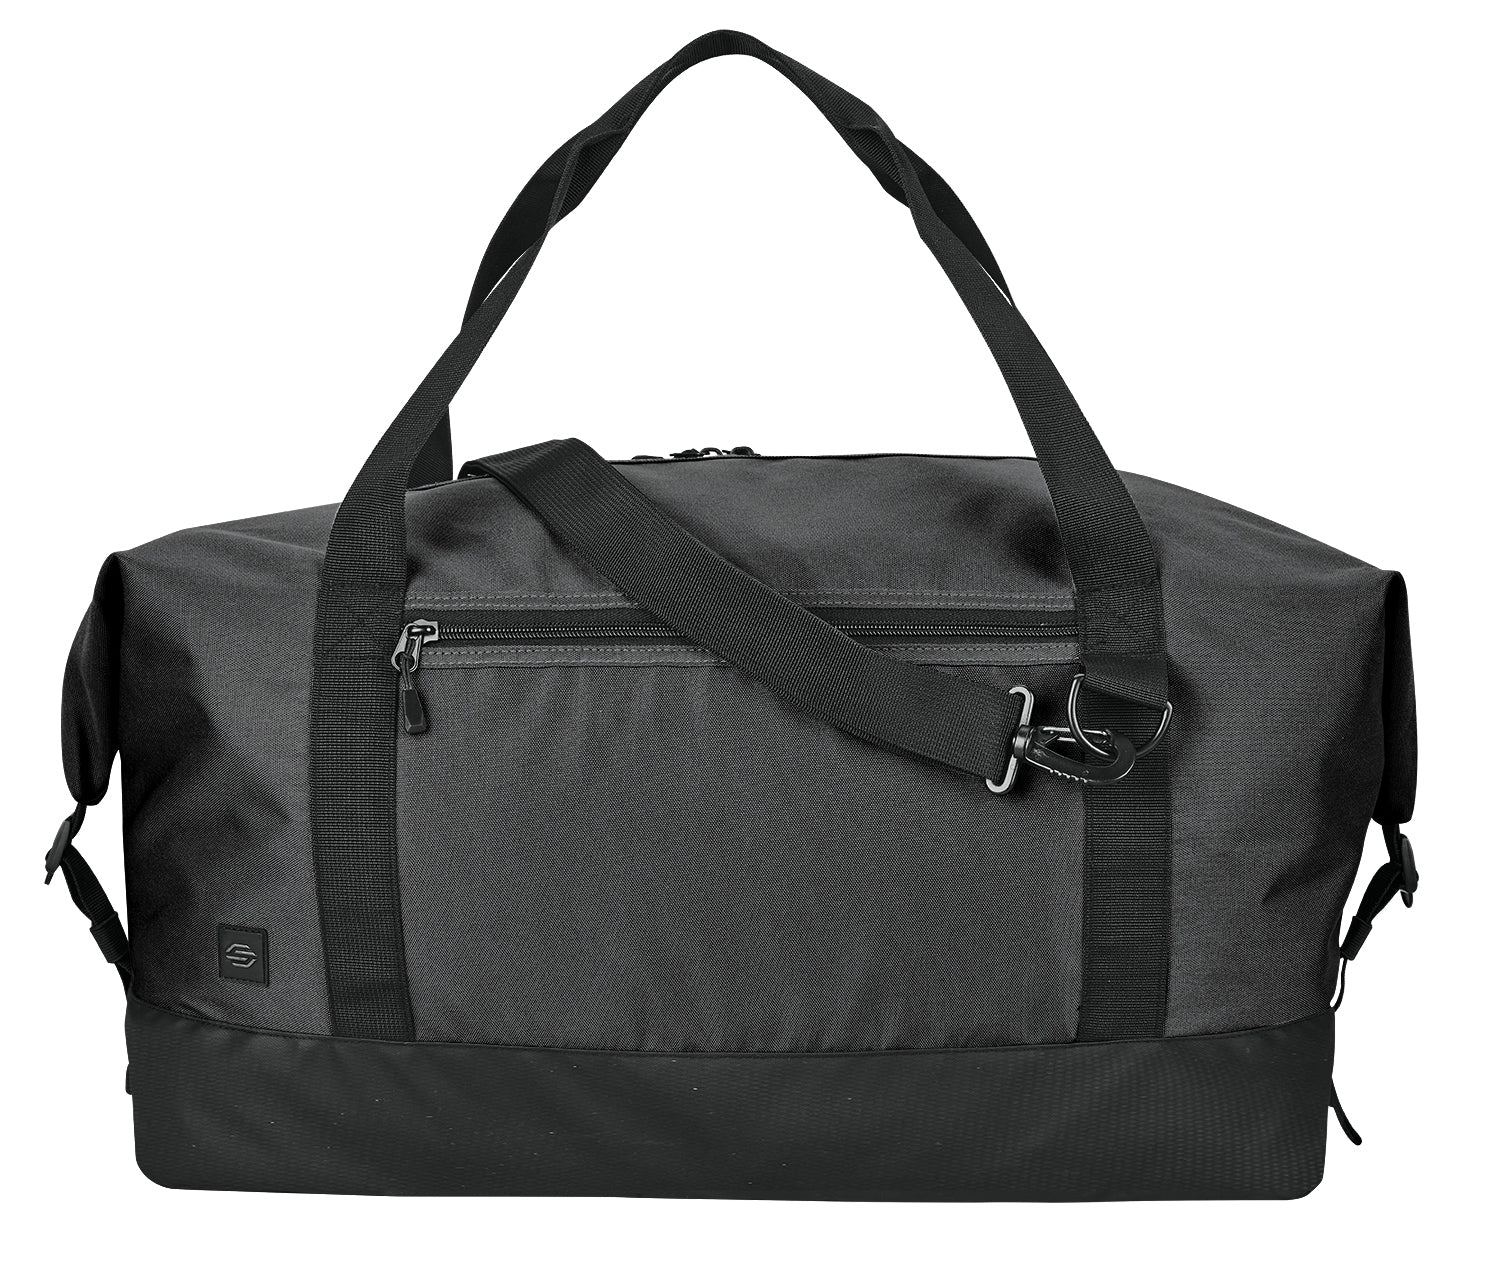 Trident Waterproof Rolling Duffel Bag - Stormtech USA Retail